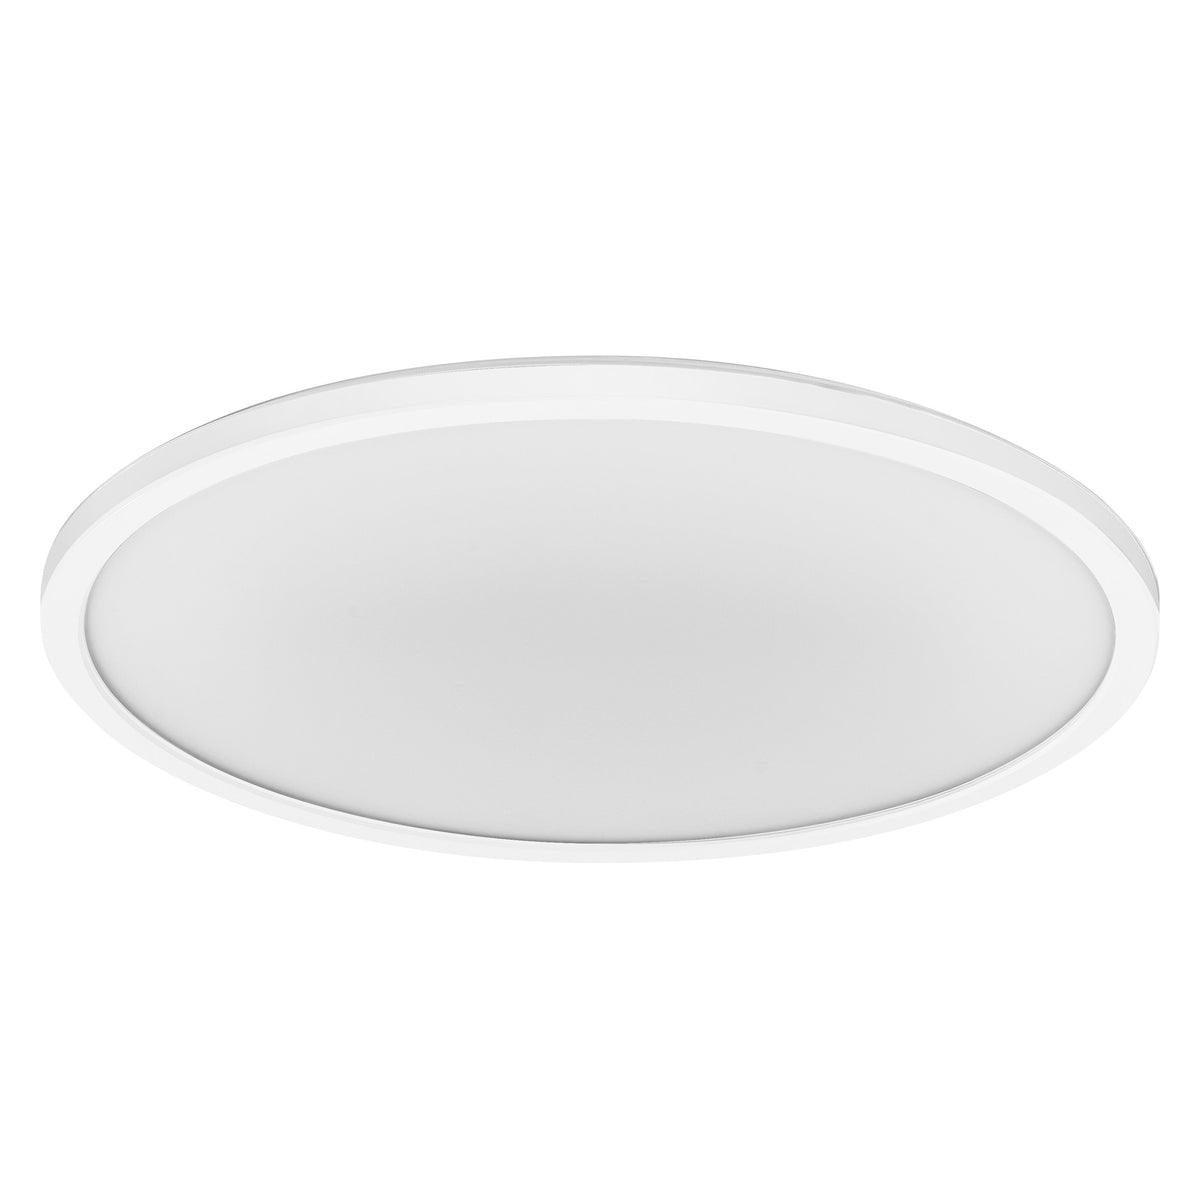 Plafoniera LEDVANCE ORBIS ClickDim 400 mm, dimmerabile, bianca